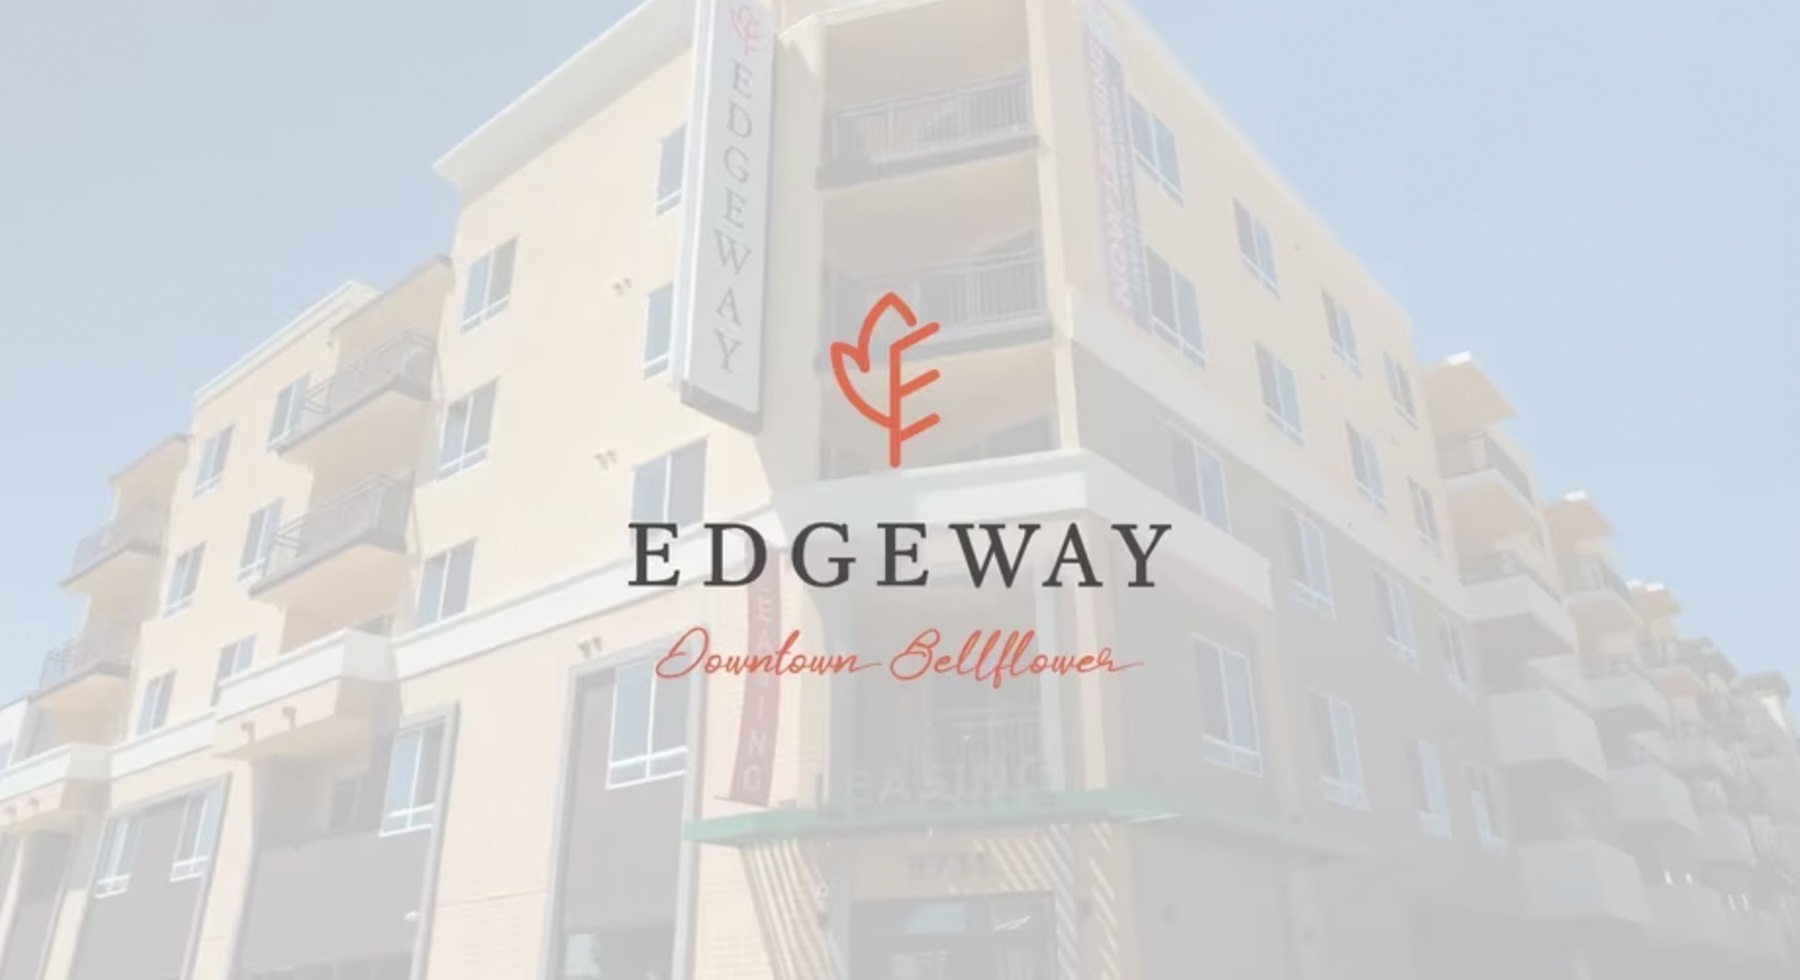 Edgeway Welcome Video